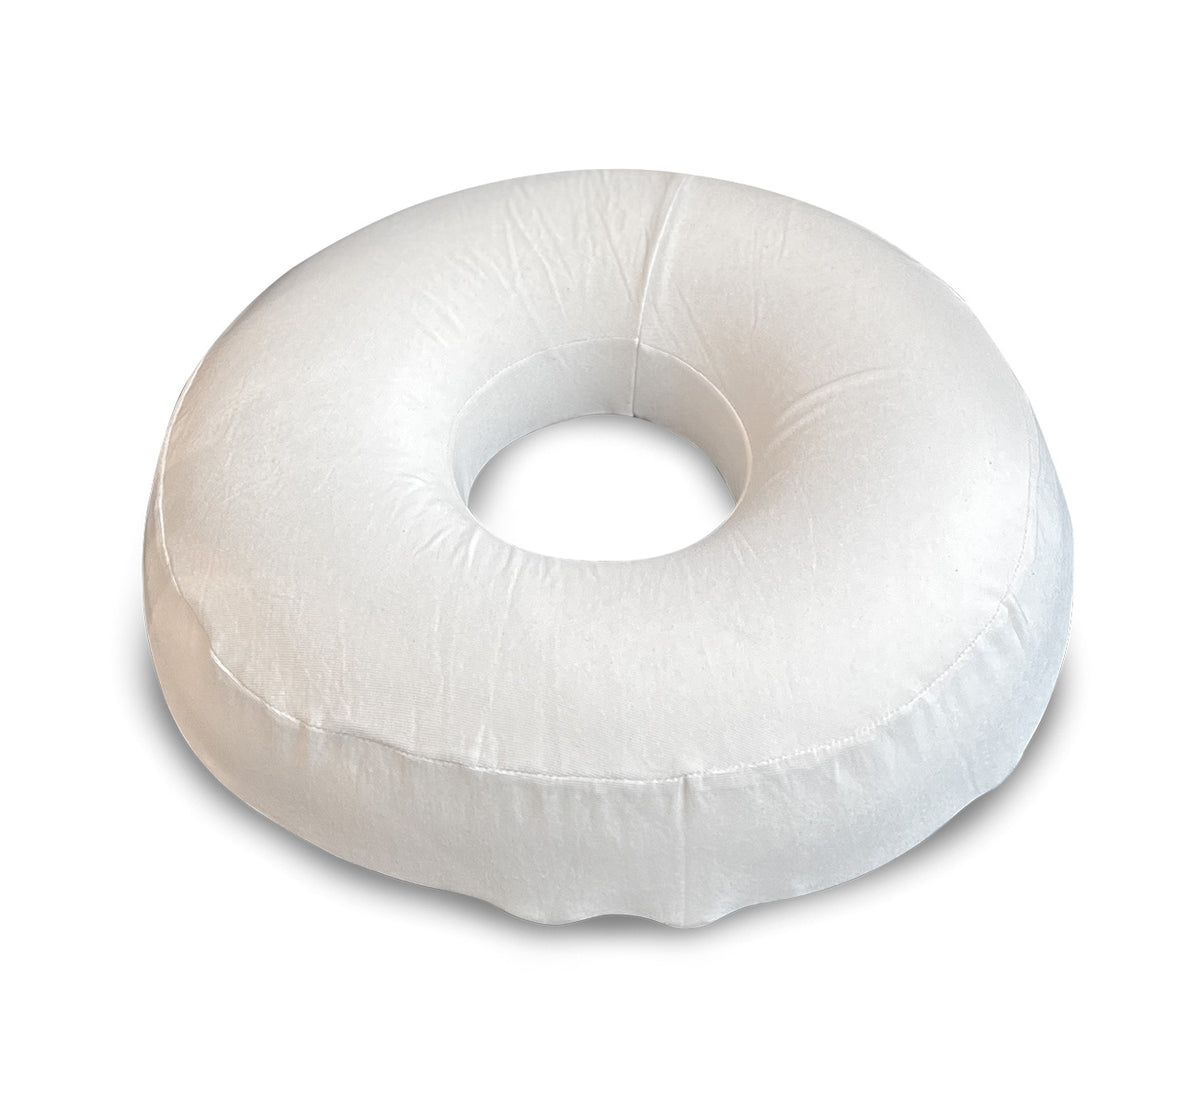 Donut Tailbone Pillow Hemorrhoid Cushion Medium Firm Post Natal